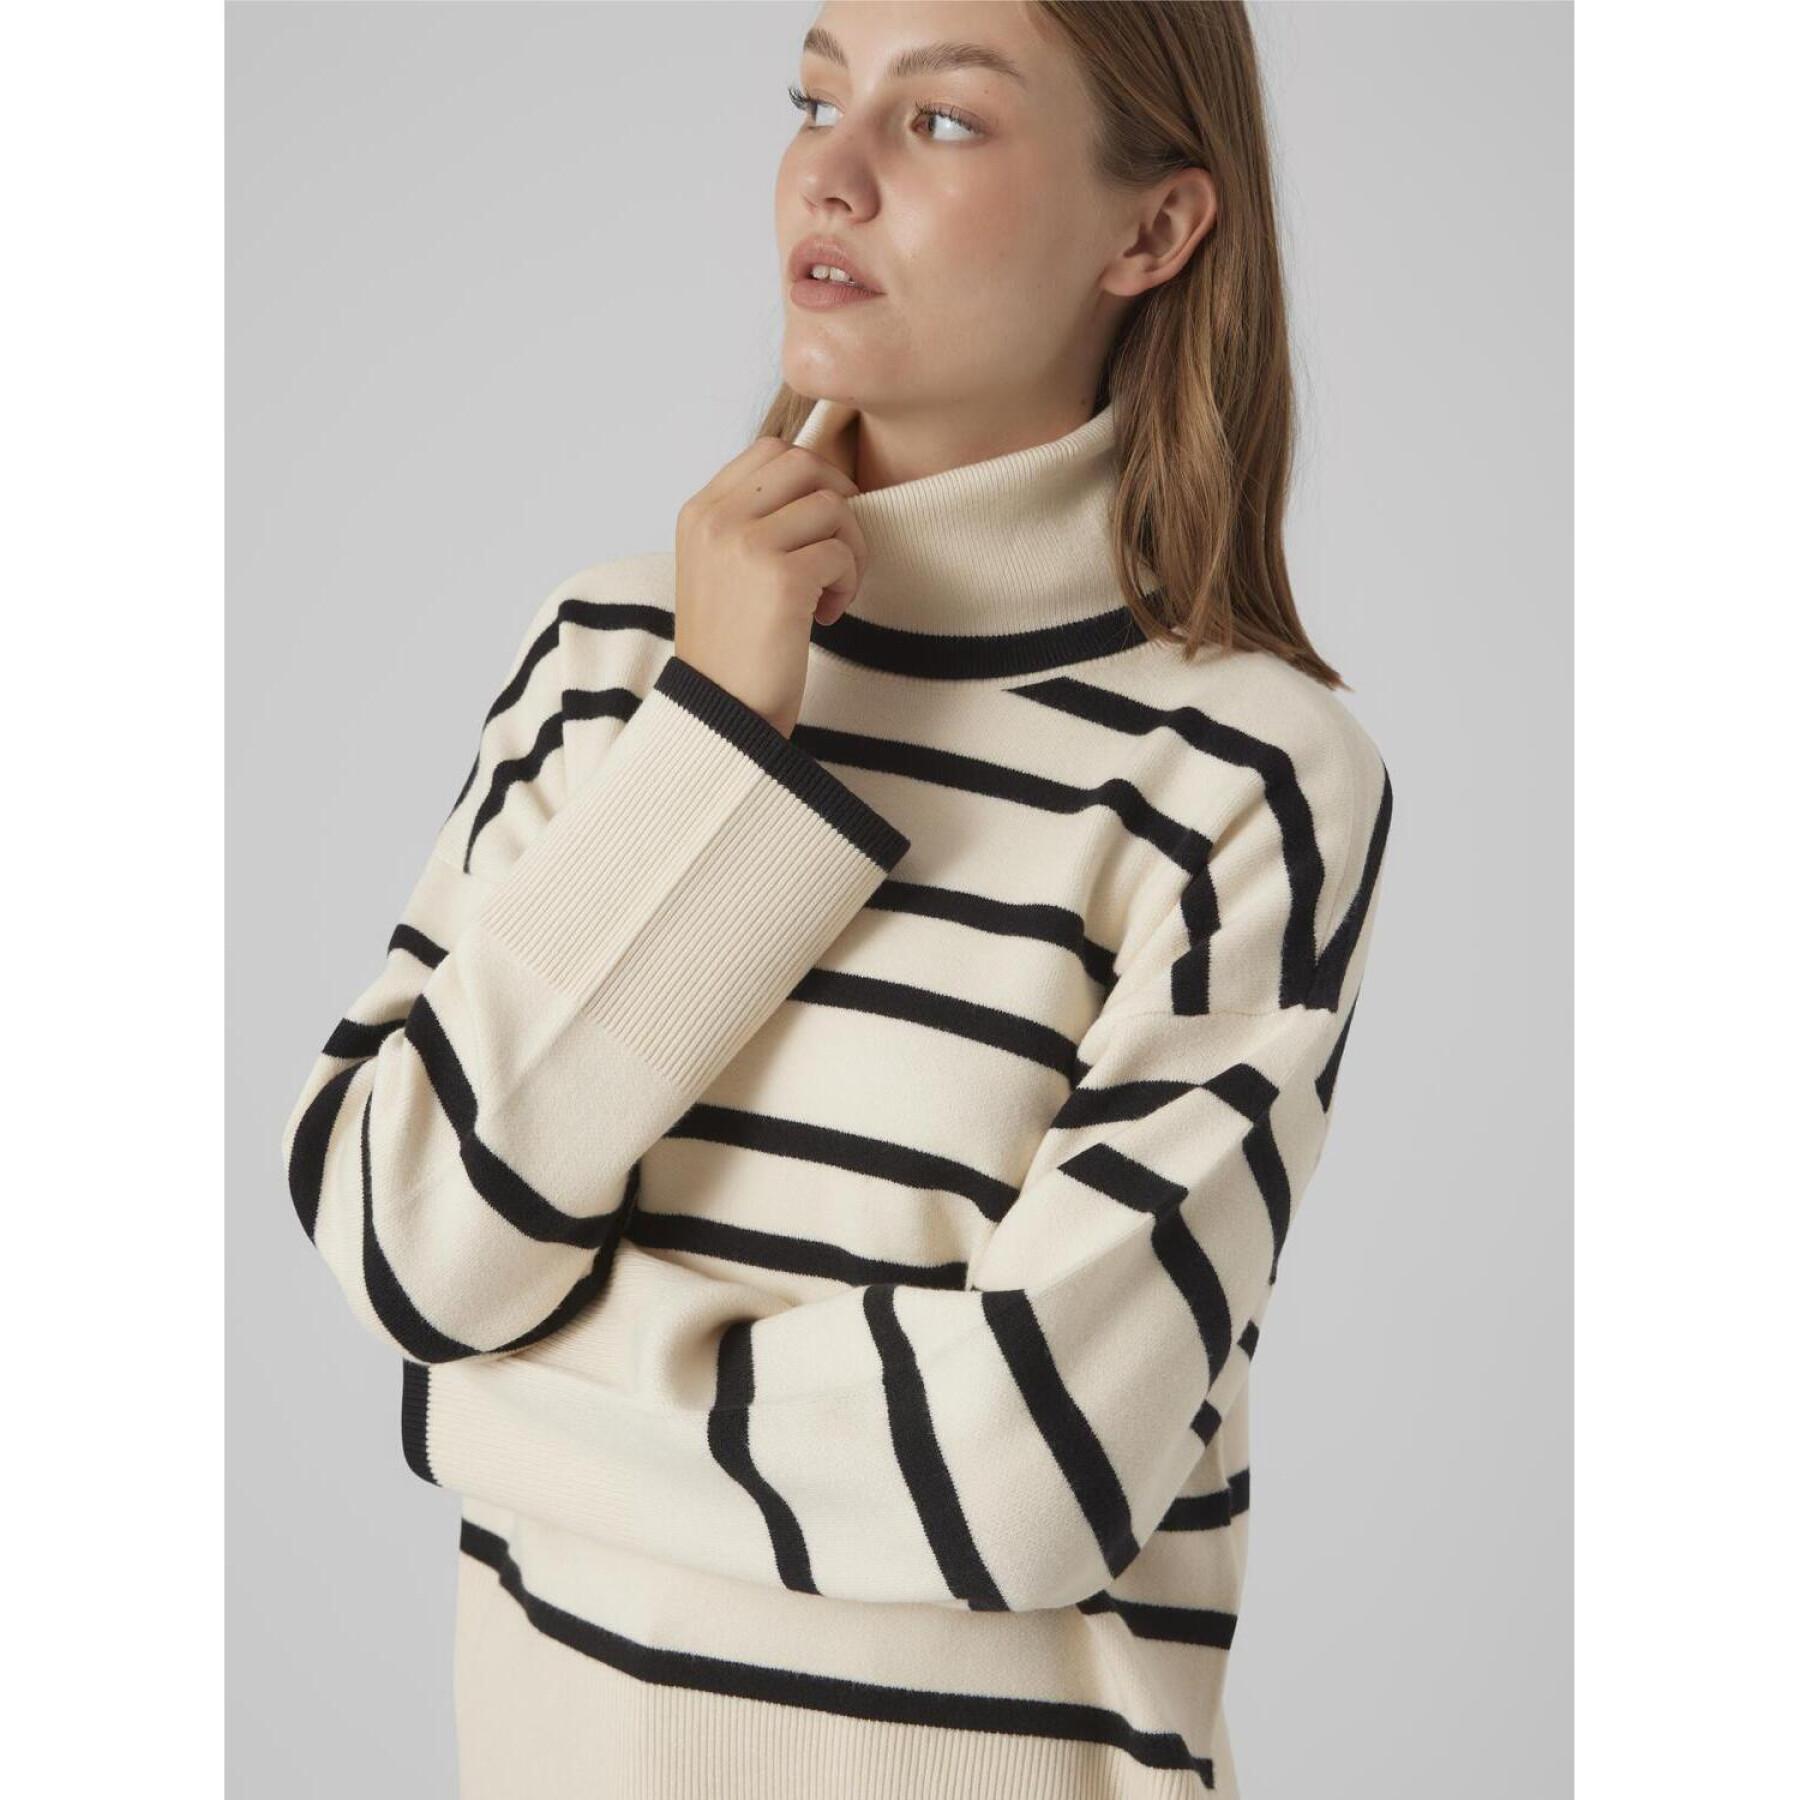 Women's stand-up collar sweater Vero Moda Saba